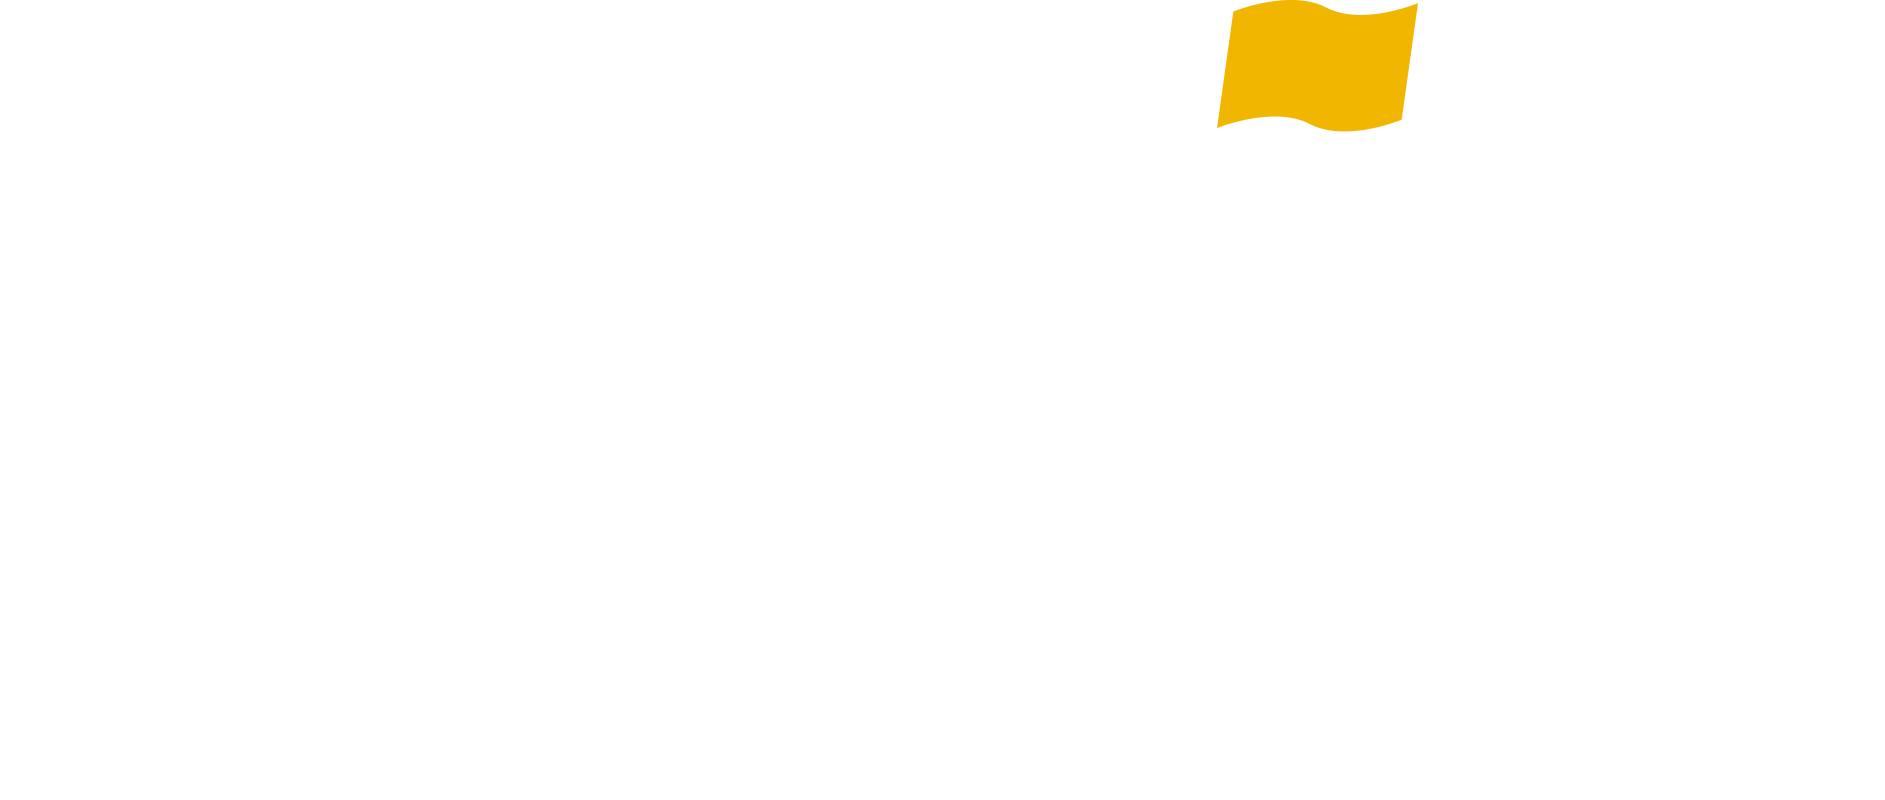 Provide-CiC-Community-Logo_2021_CMYK_White